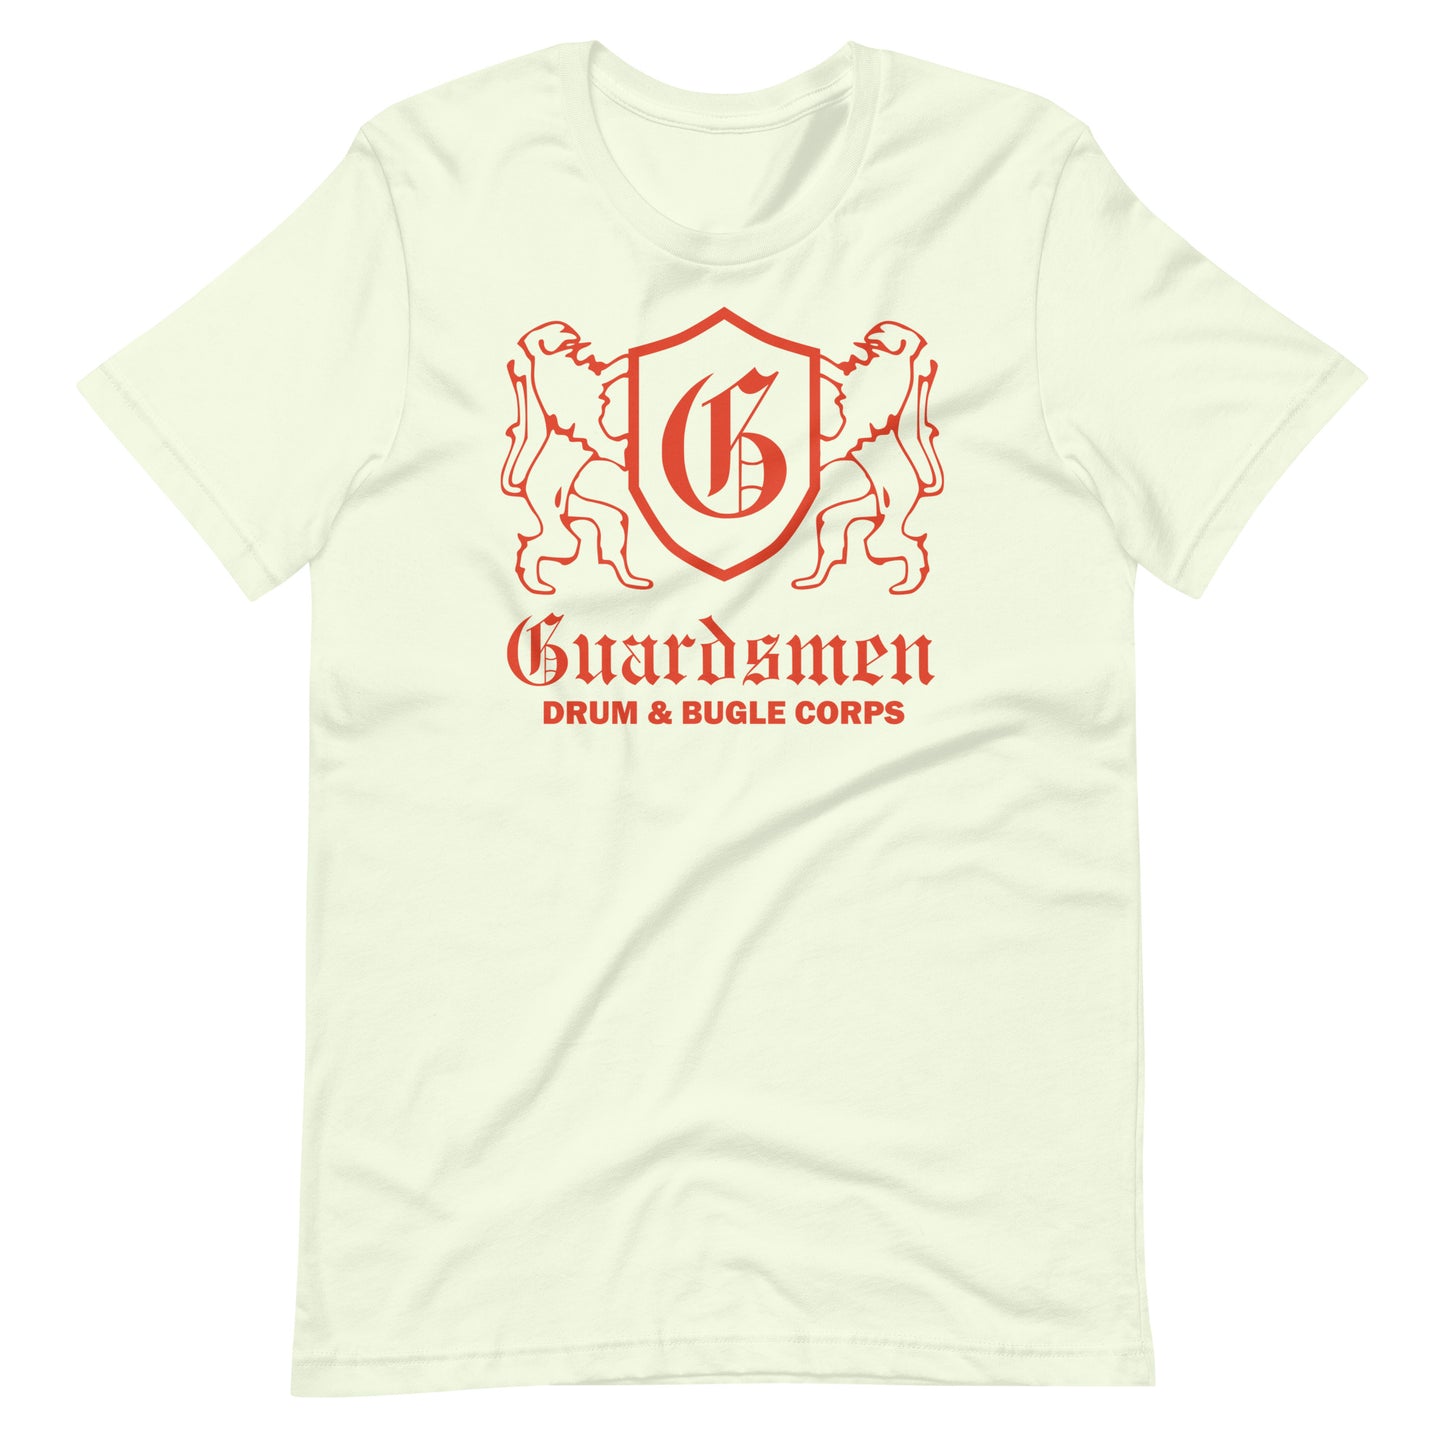 Guardsmen DBC t-shirt